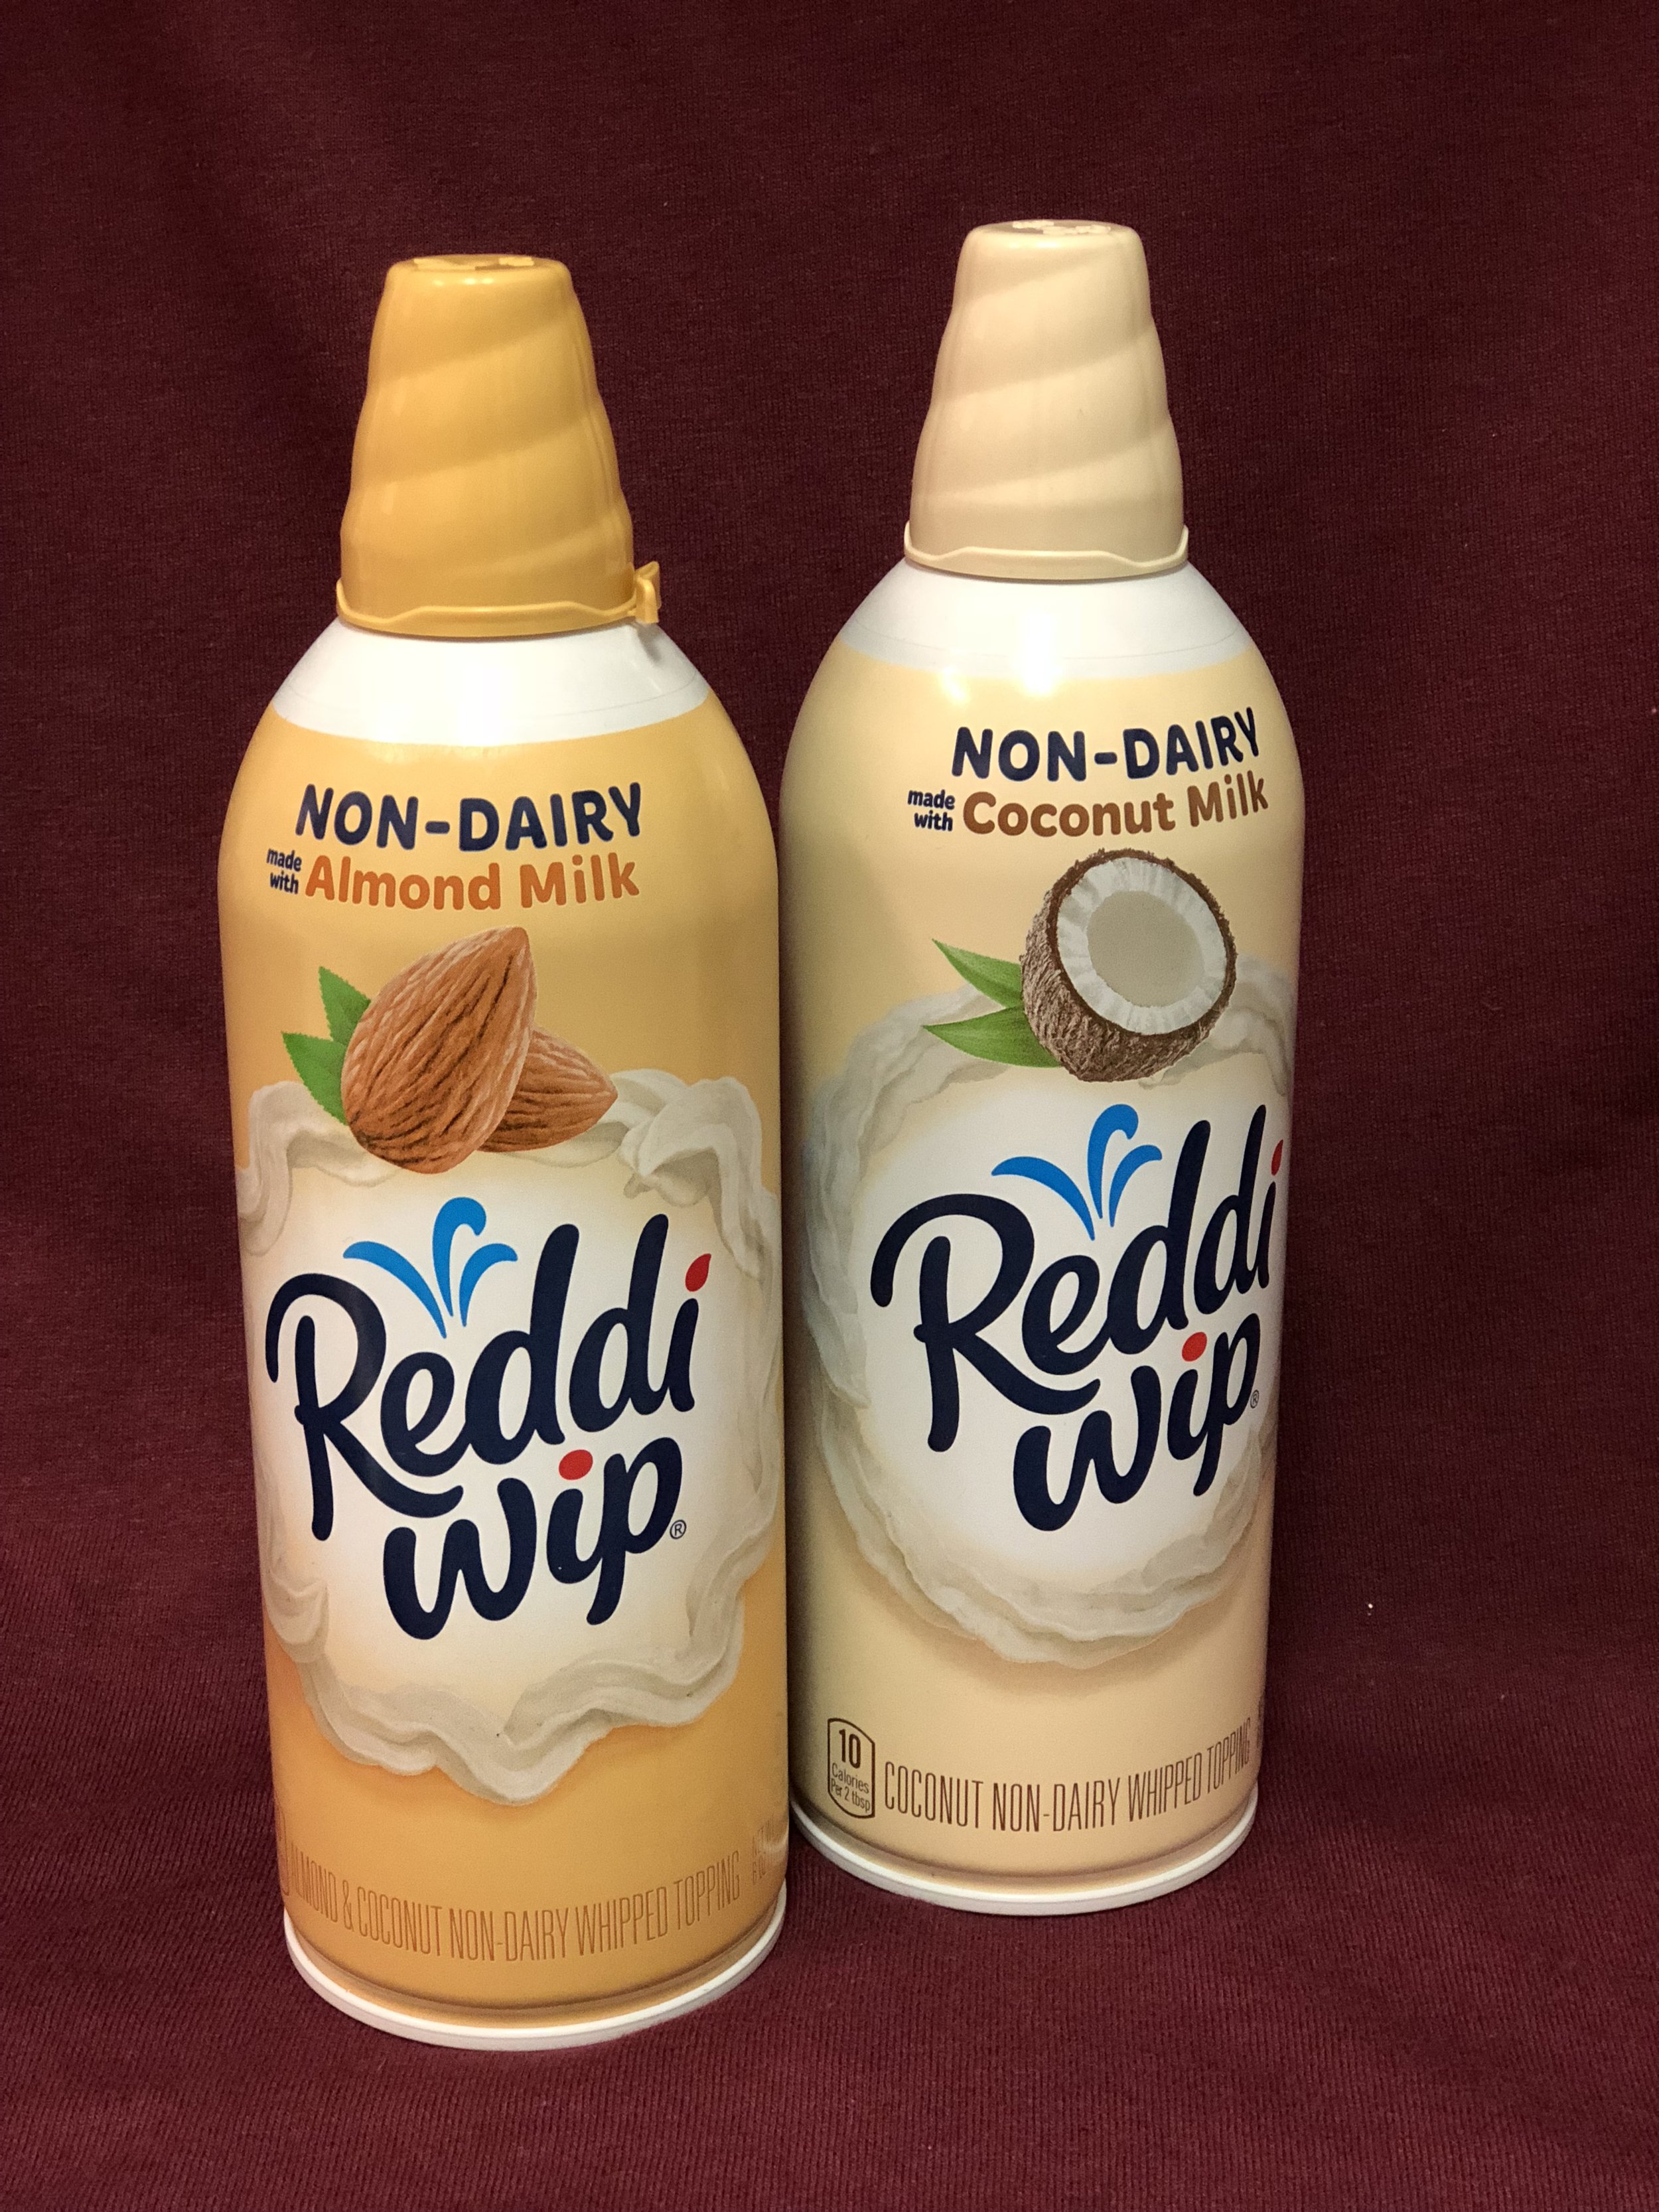 Non-Dairy Reddi Whips